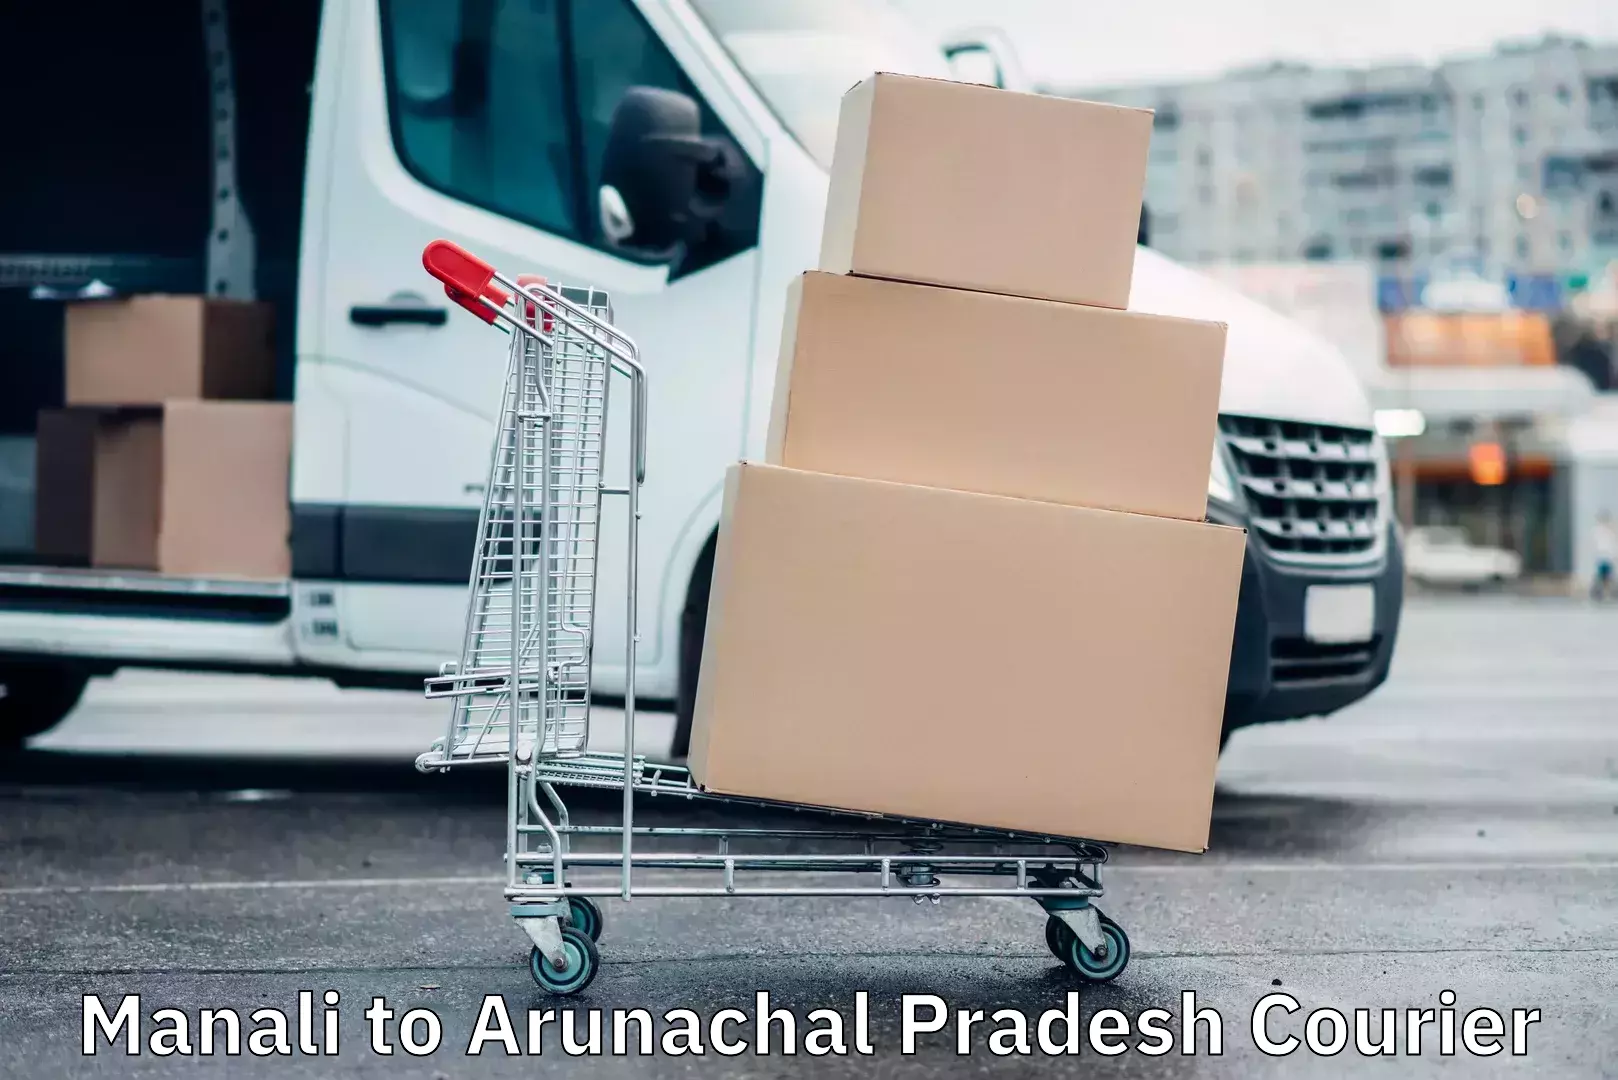 Specialized shipment handling Manali to Arunachal Pradesh